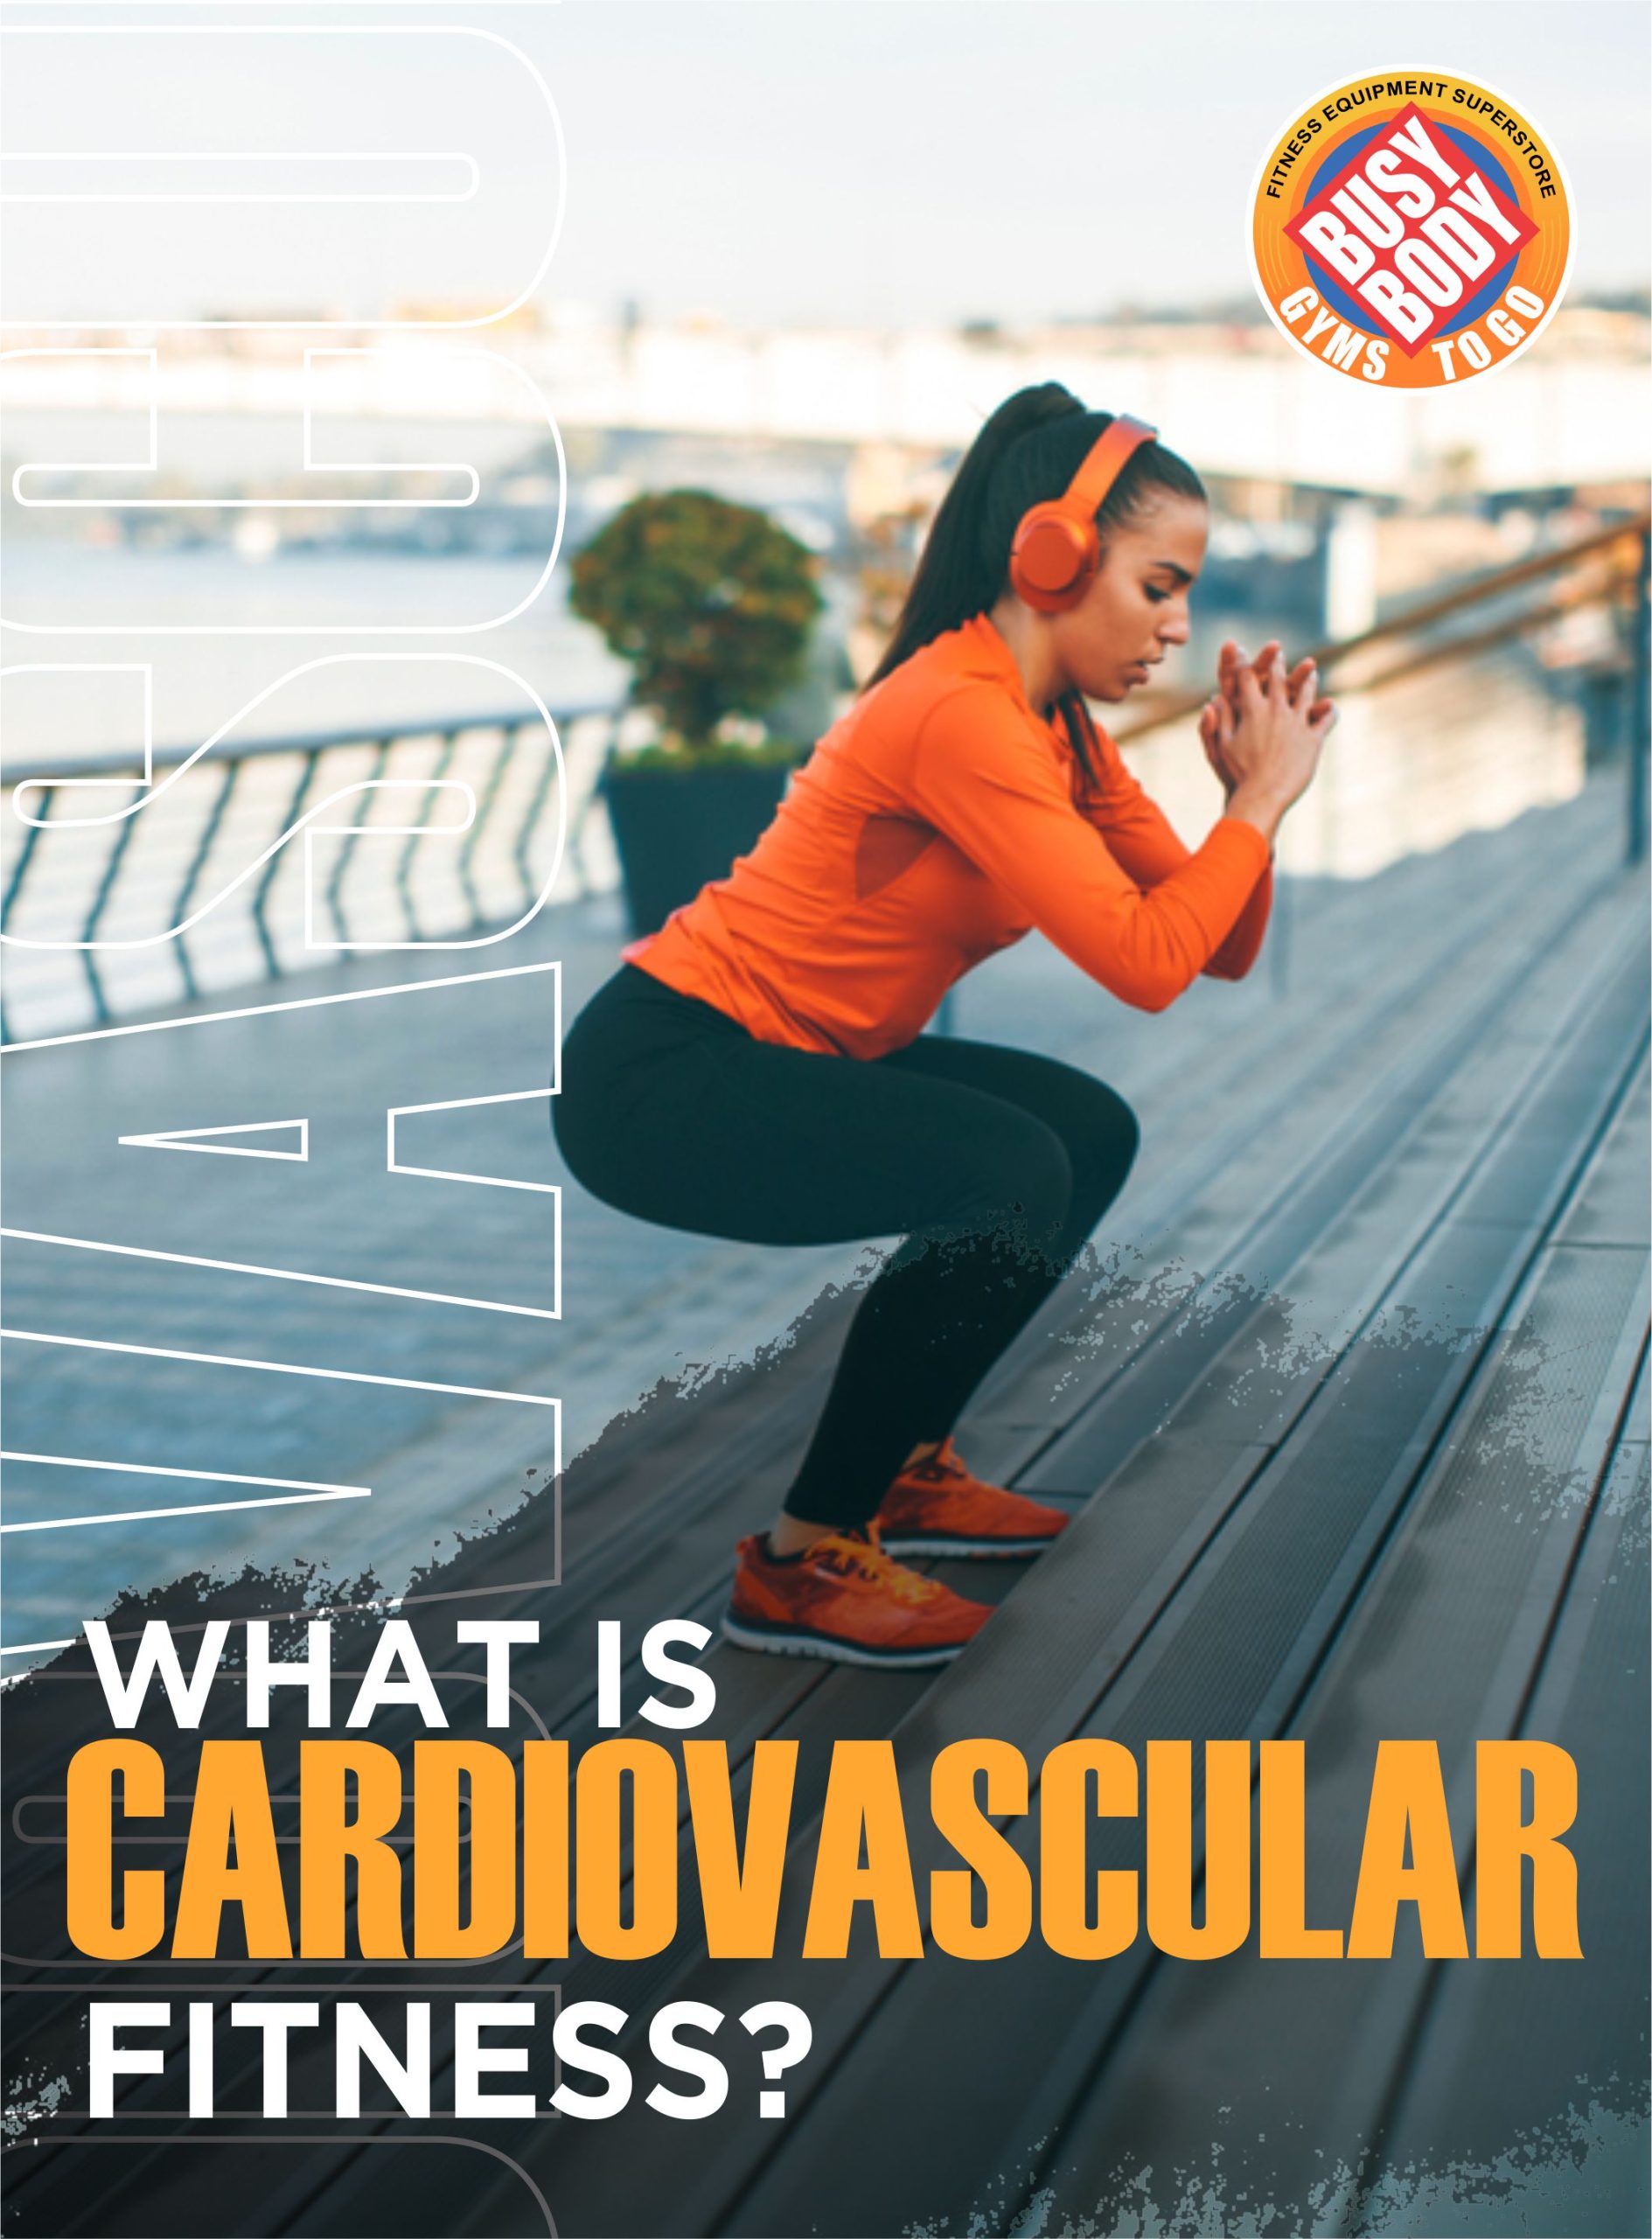 Cardiovascular fitness